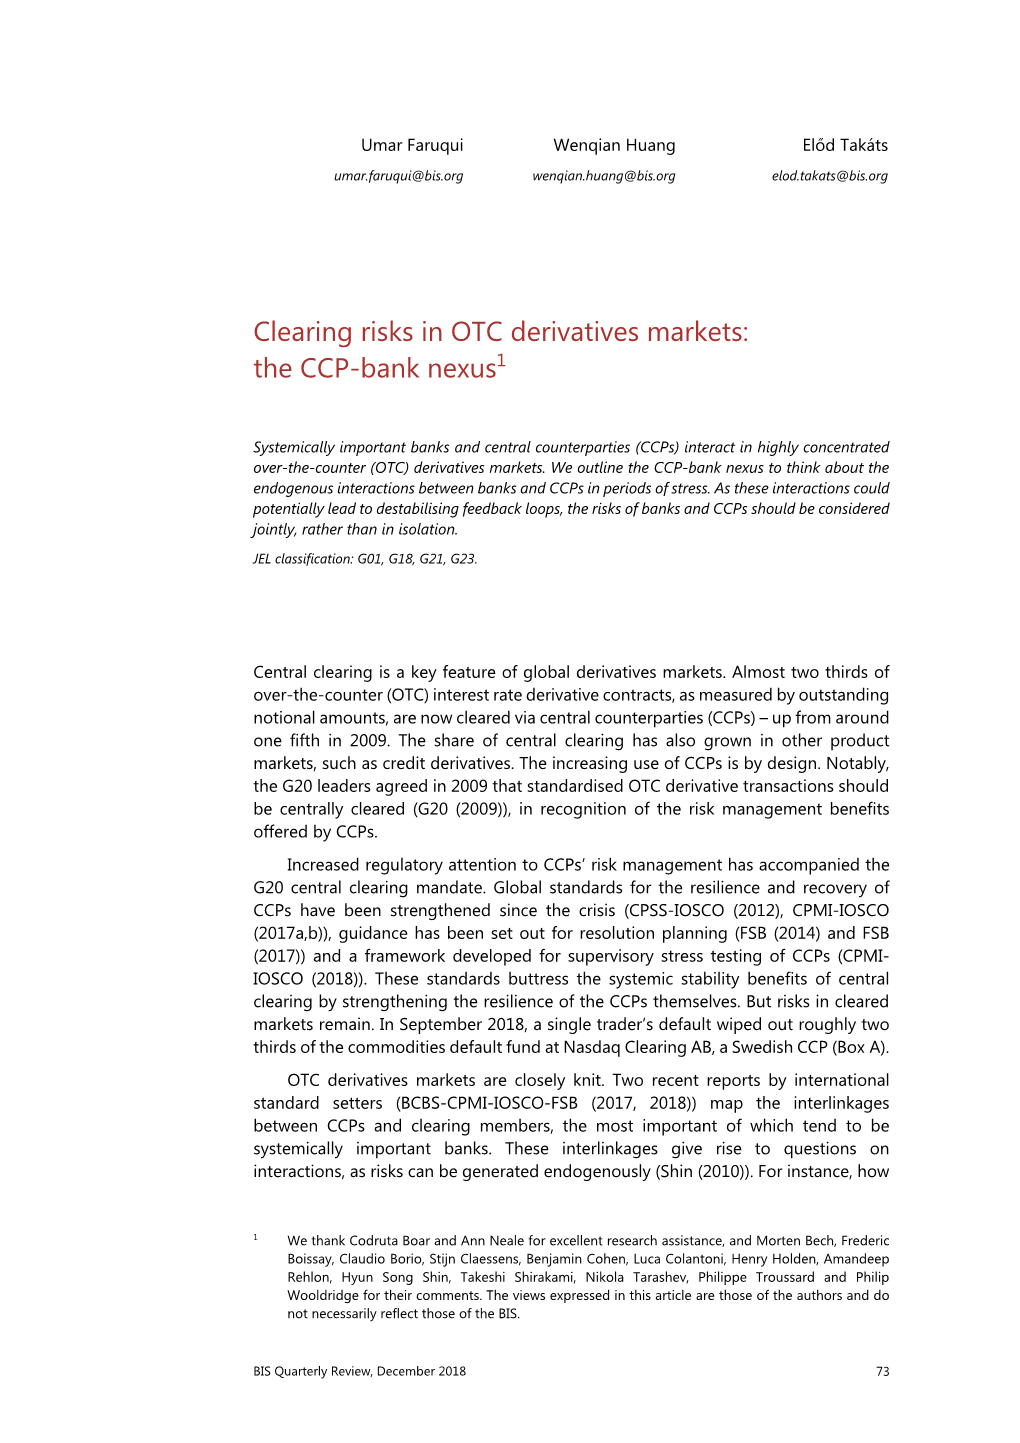 Clearing Risks in OTC Derivatives Markets:The CCP-Bank Nexus